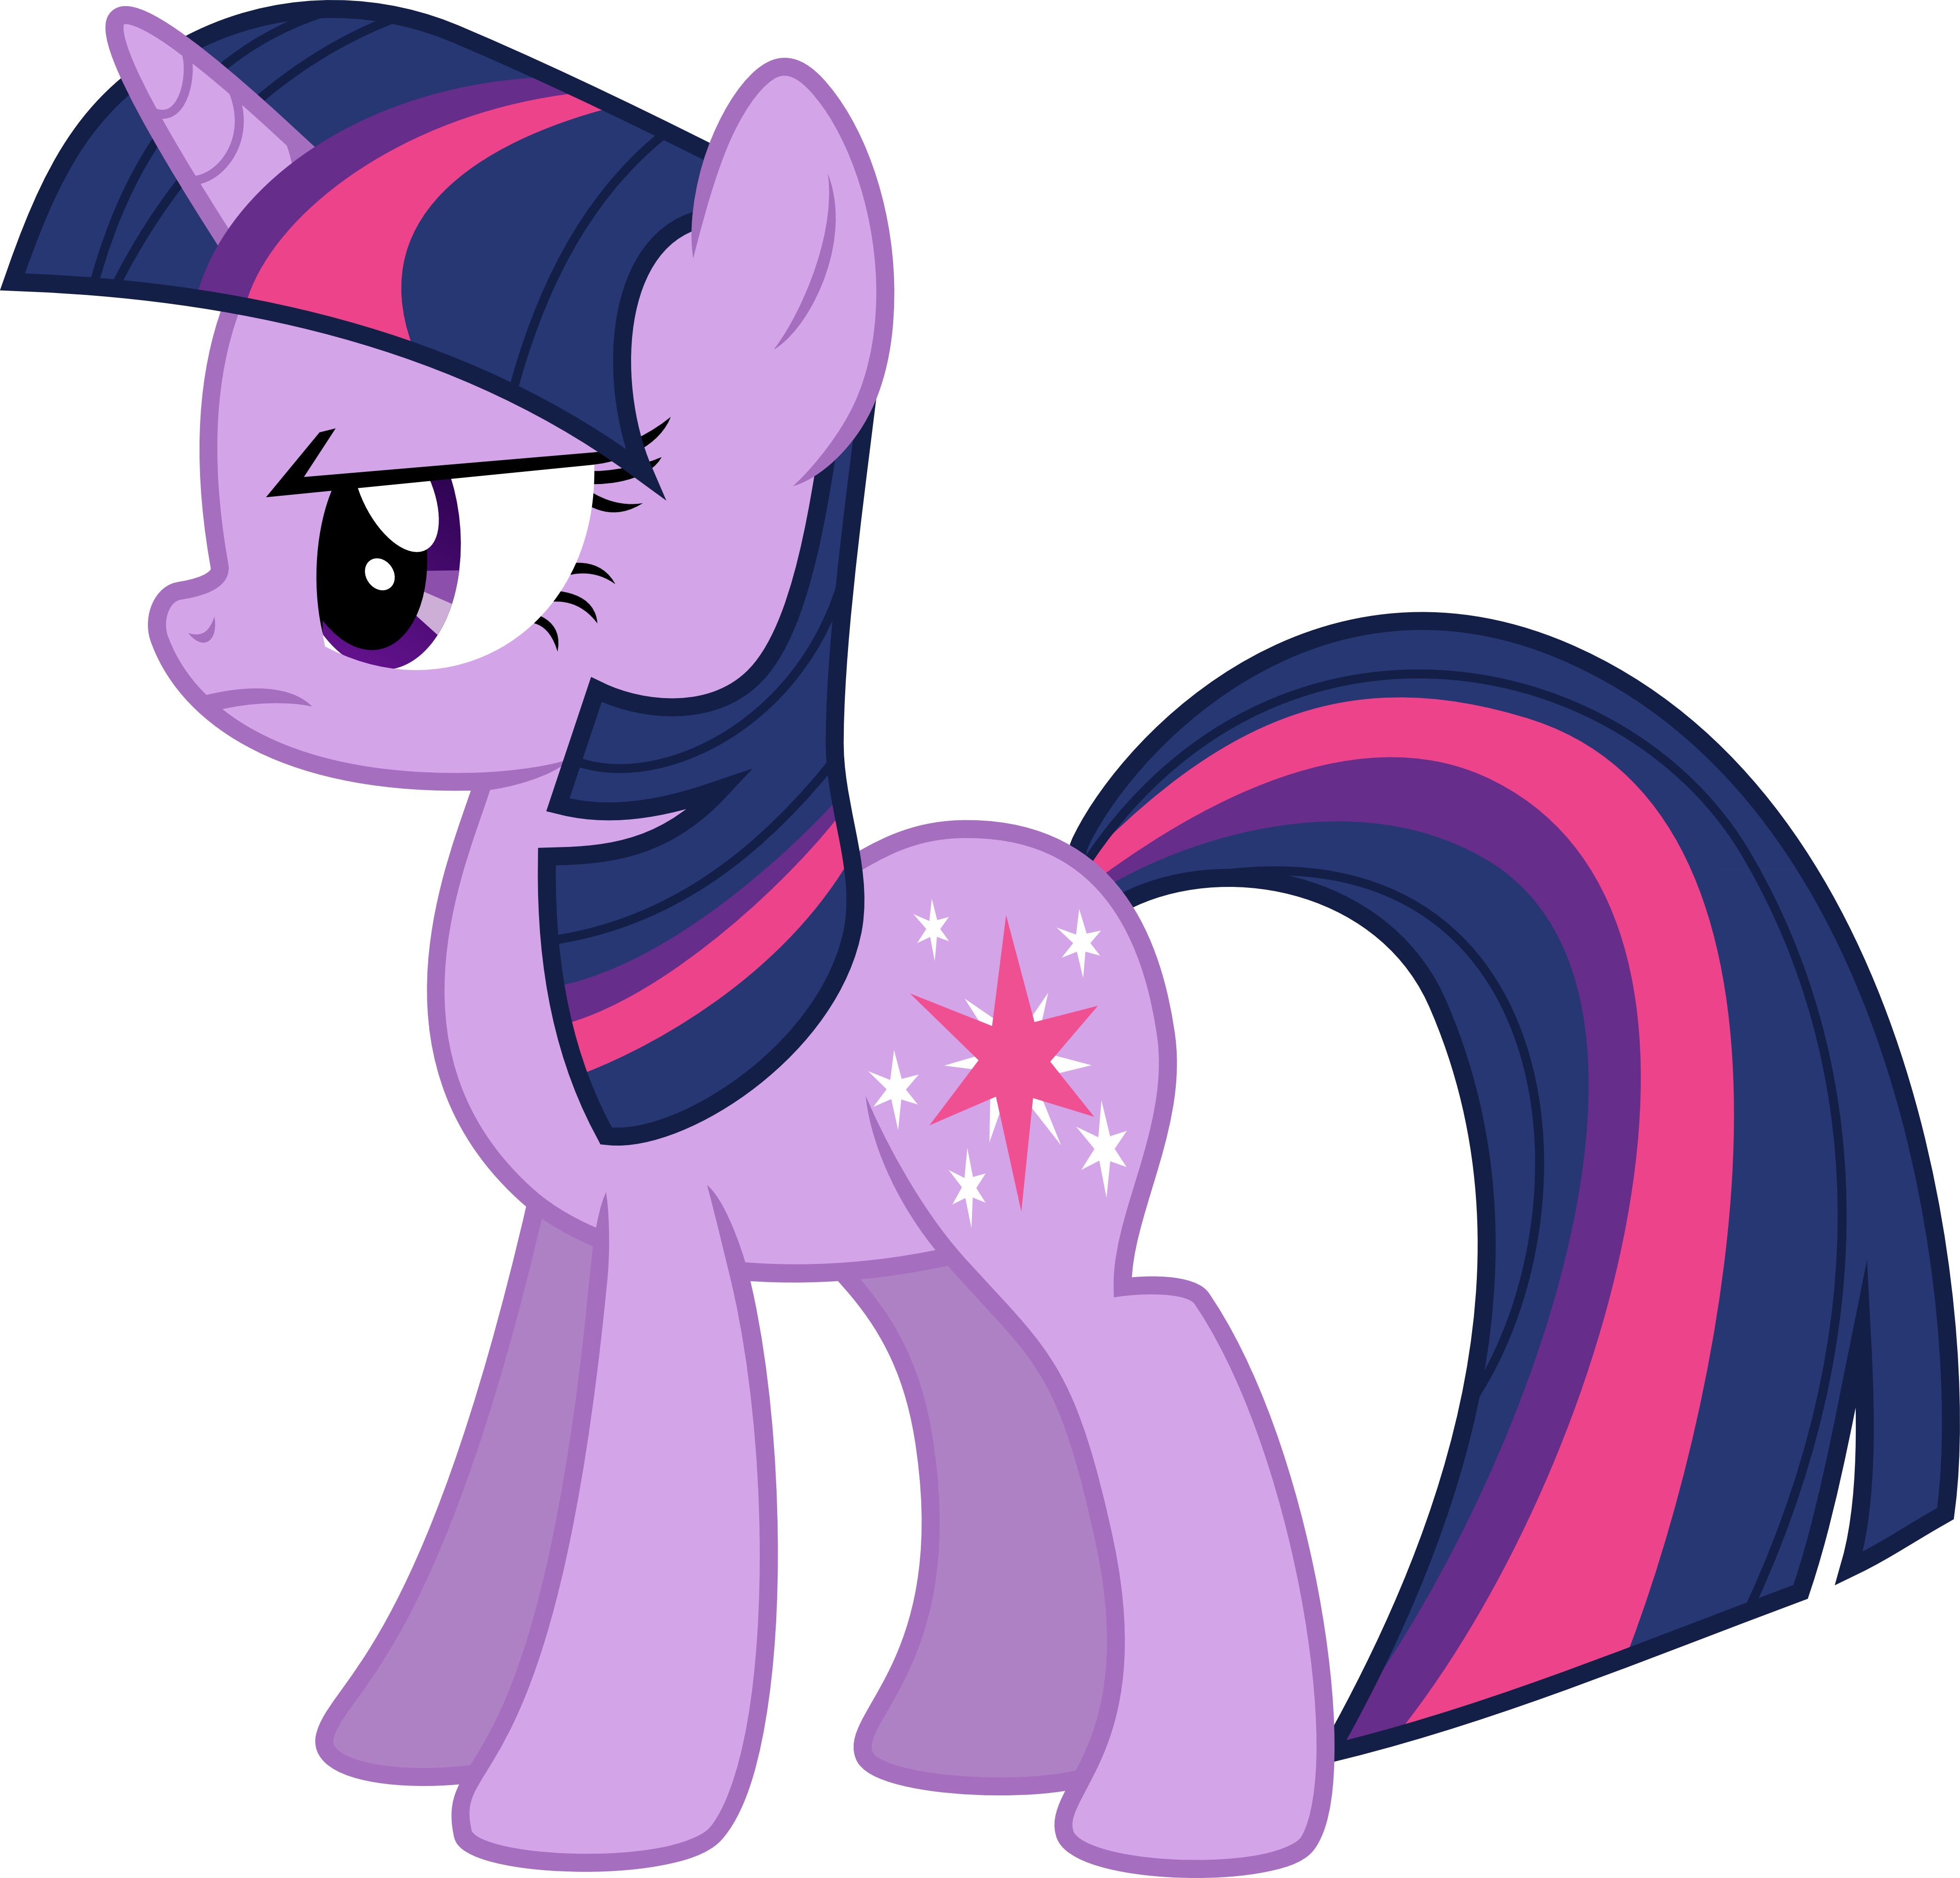 Youtube ponies. Твайлайт Спаркл. My little Pony Искорка. Твайлайт пони. Сумеречная Искорка Twilight Sparkle.